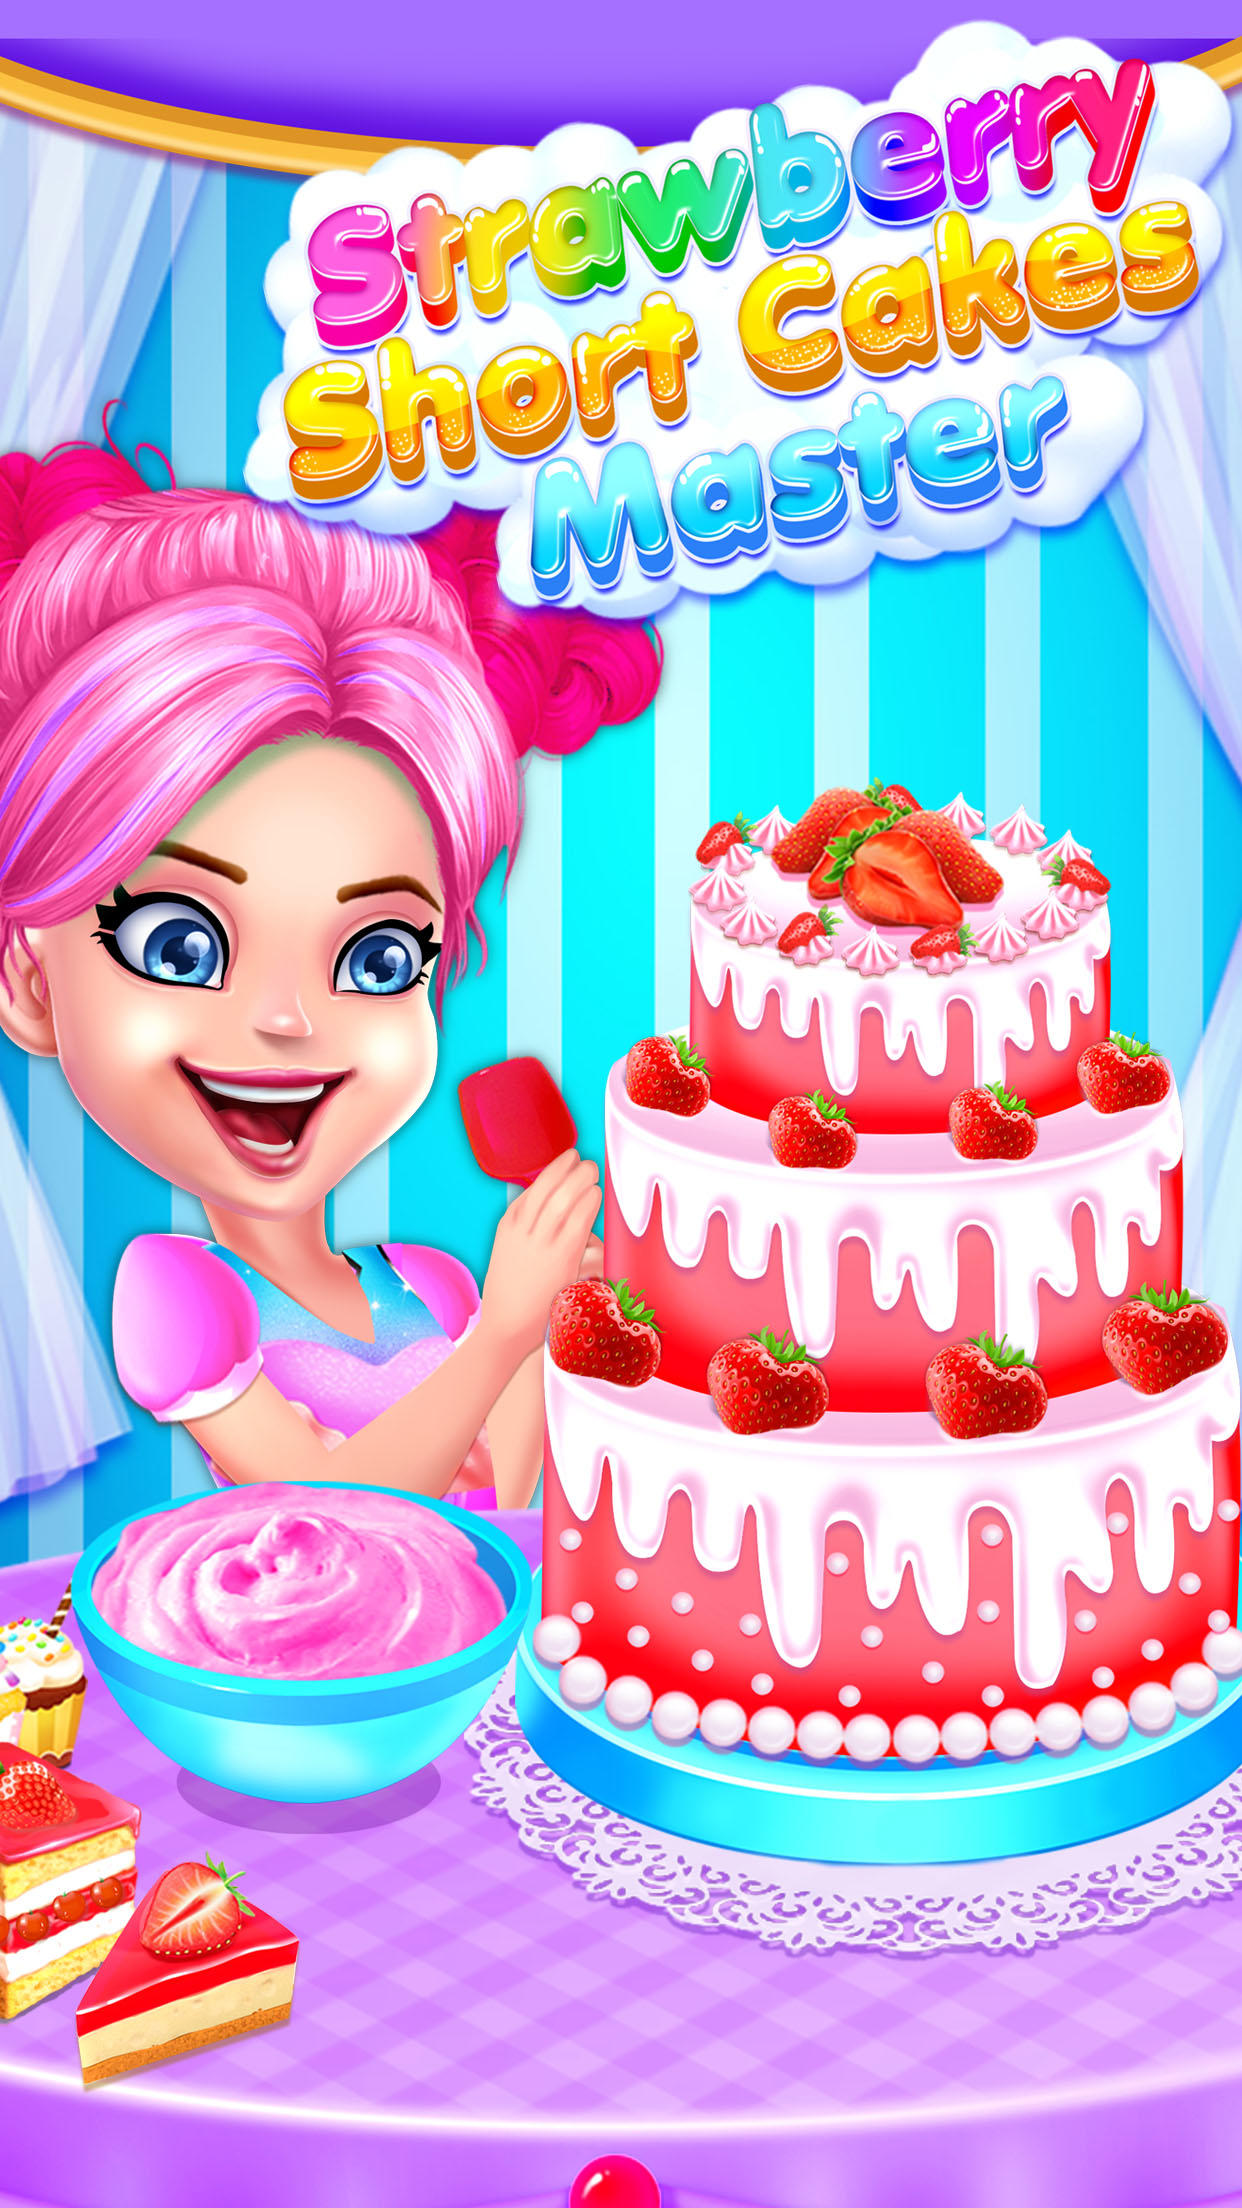 Cooking Games - The Perfect Wedding Cake - Baking wedding cake game - video  Dailymotion